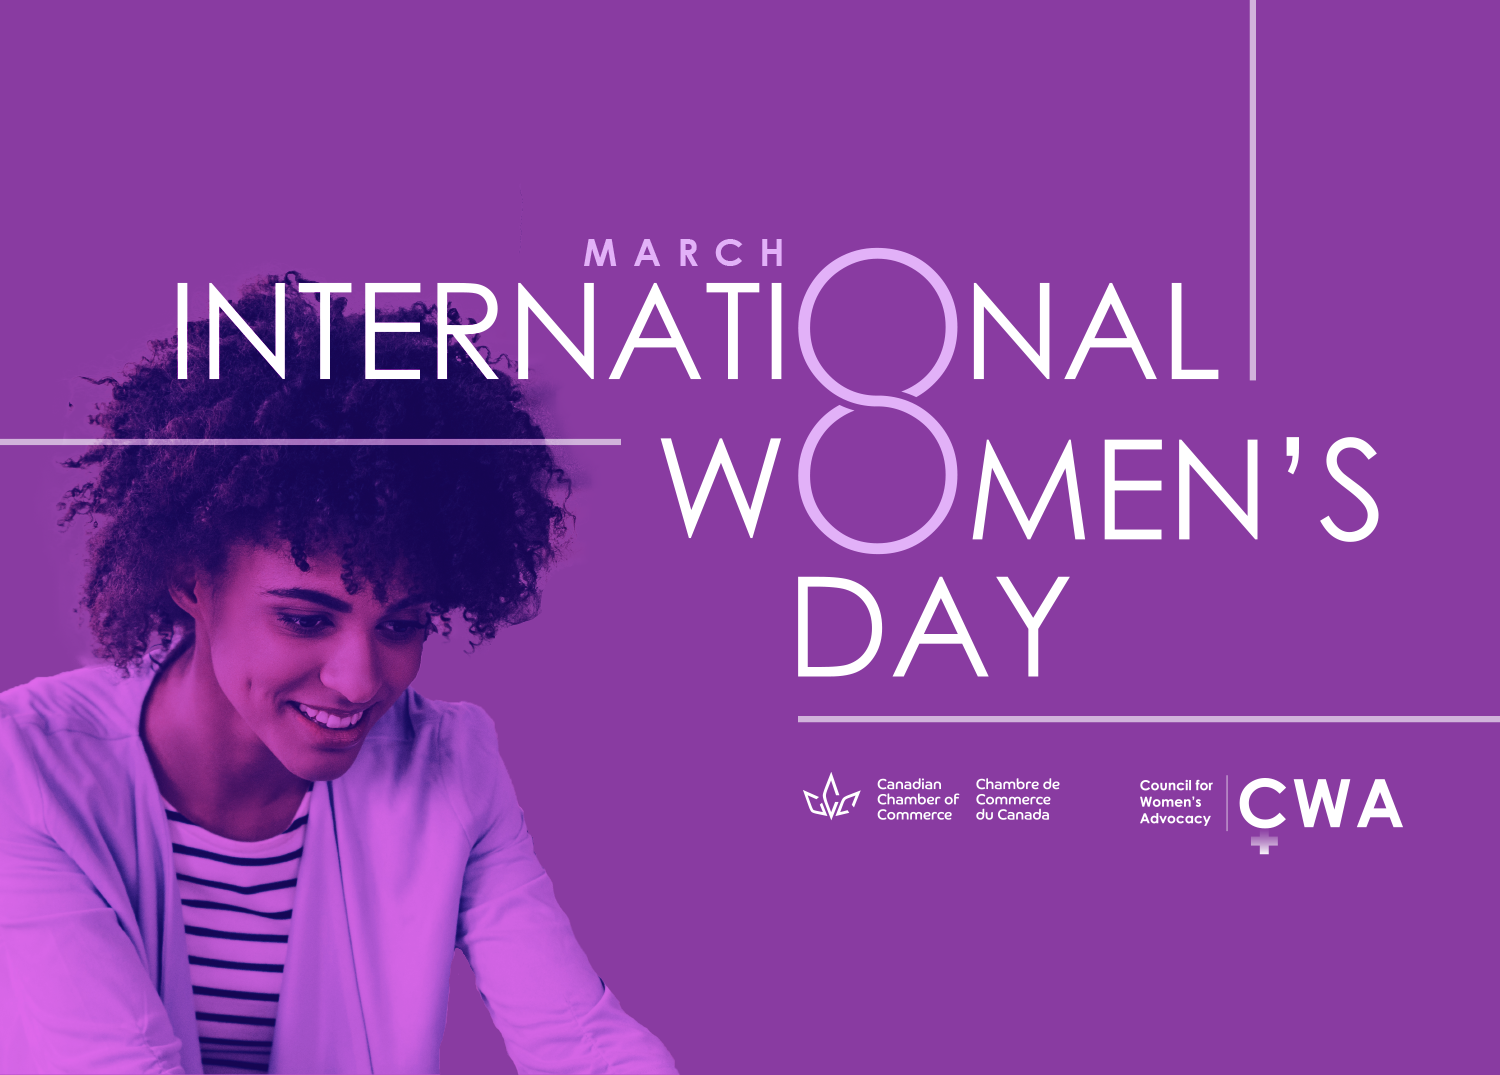 Canadian Chamber of Commerce celebrates International Women's Day